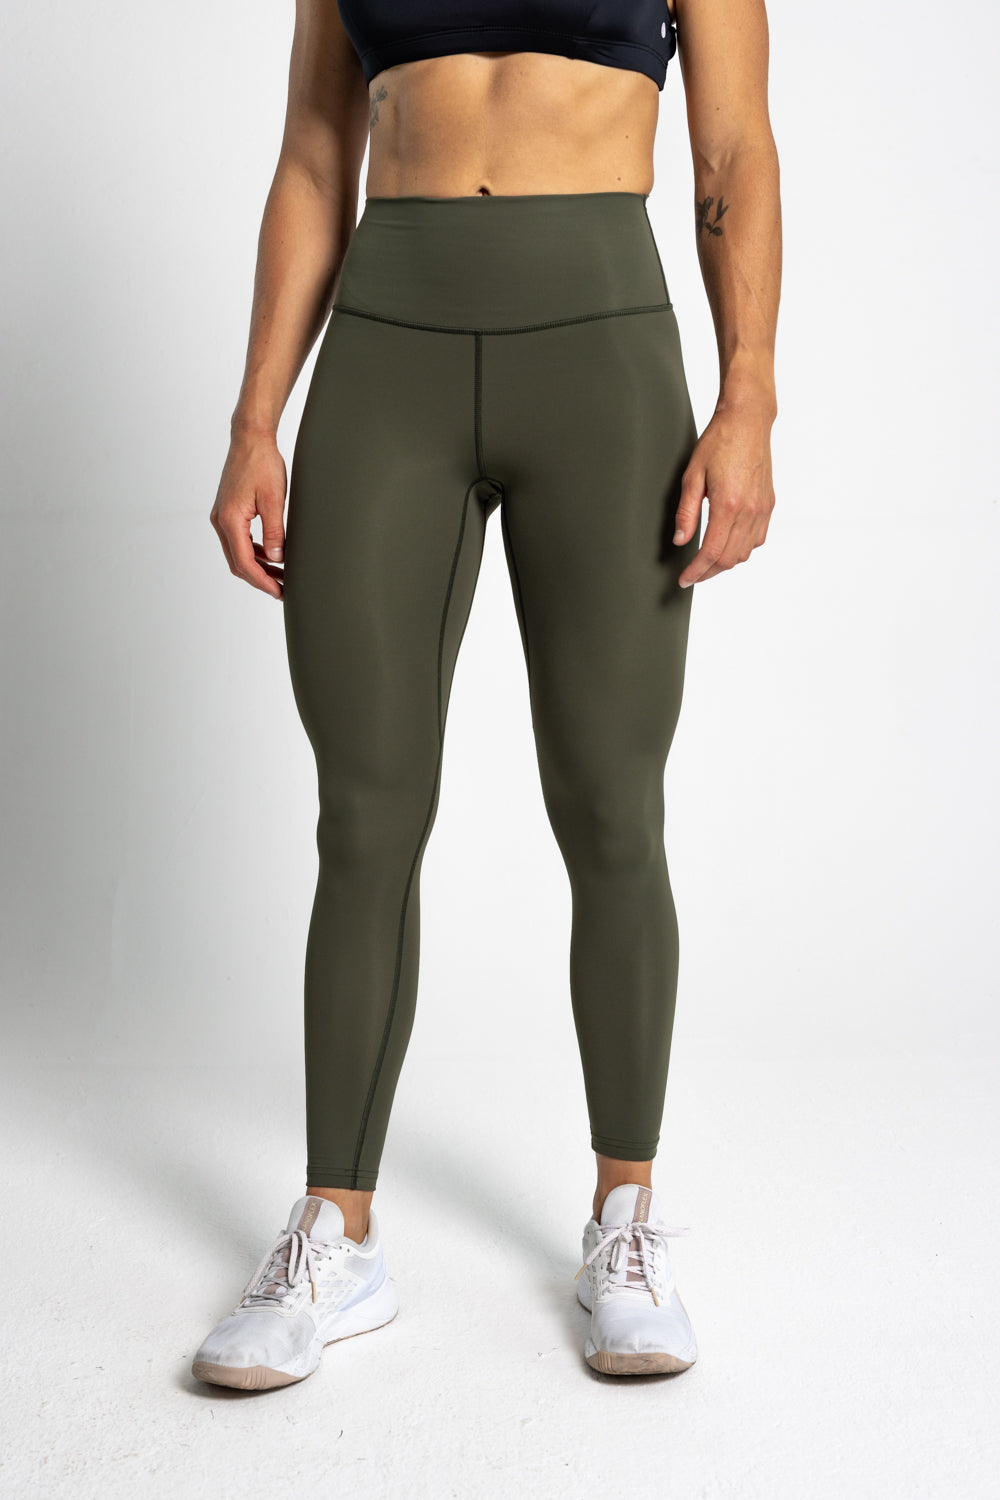 Gymreapers Leggings Womens Medium Ranger Green Legacy Compression Gym  Activewear